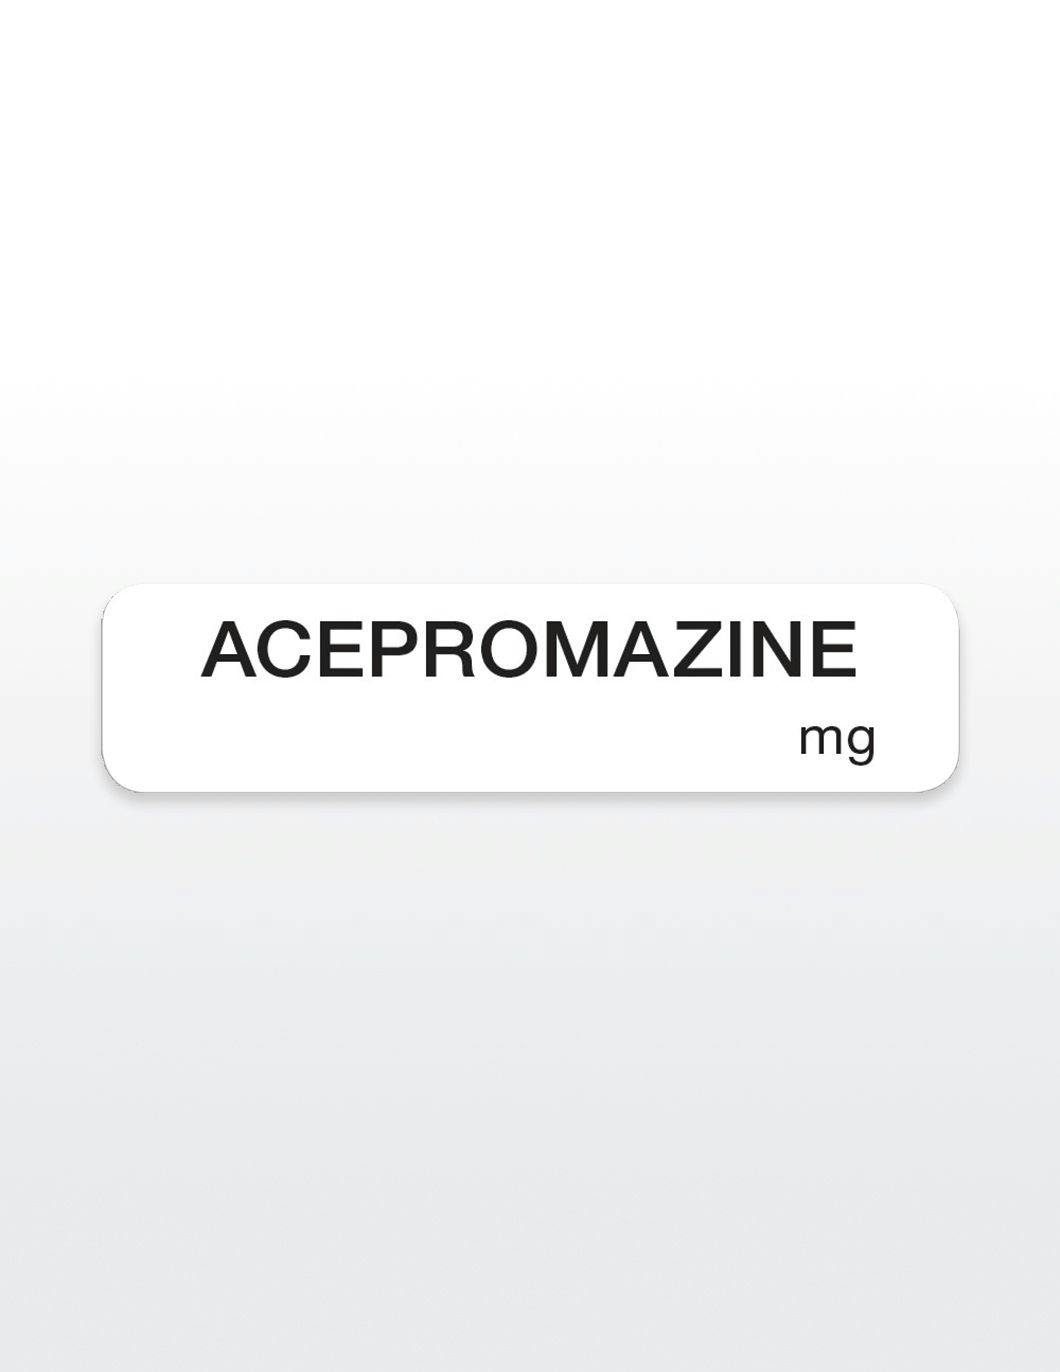 acepromazine-drug-syringe-stickers